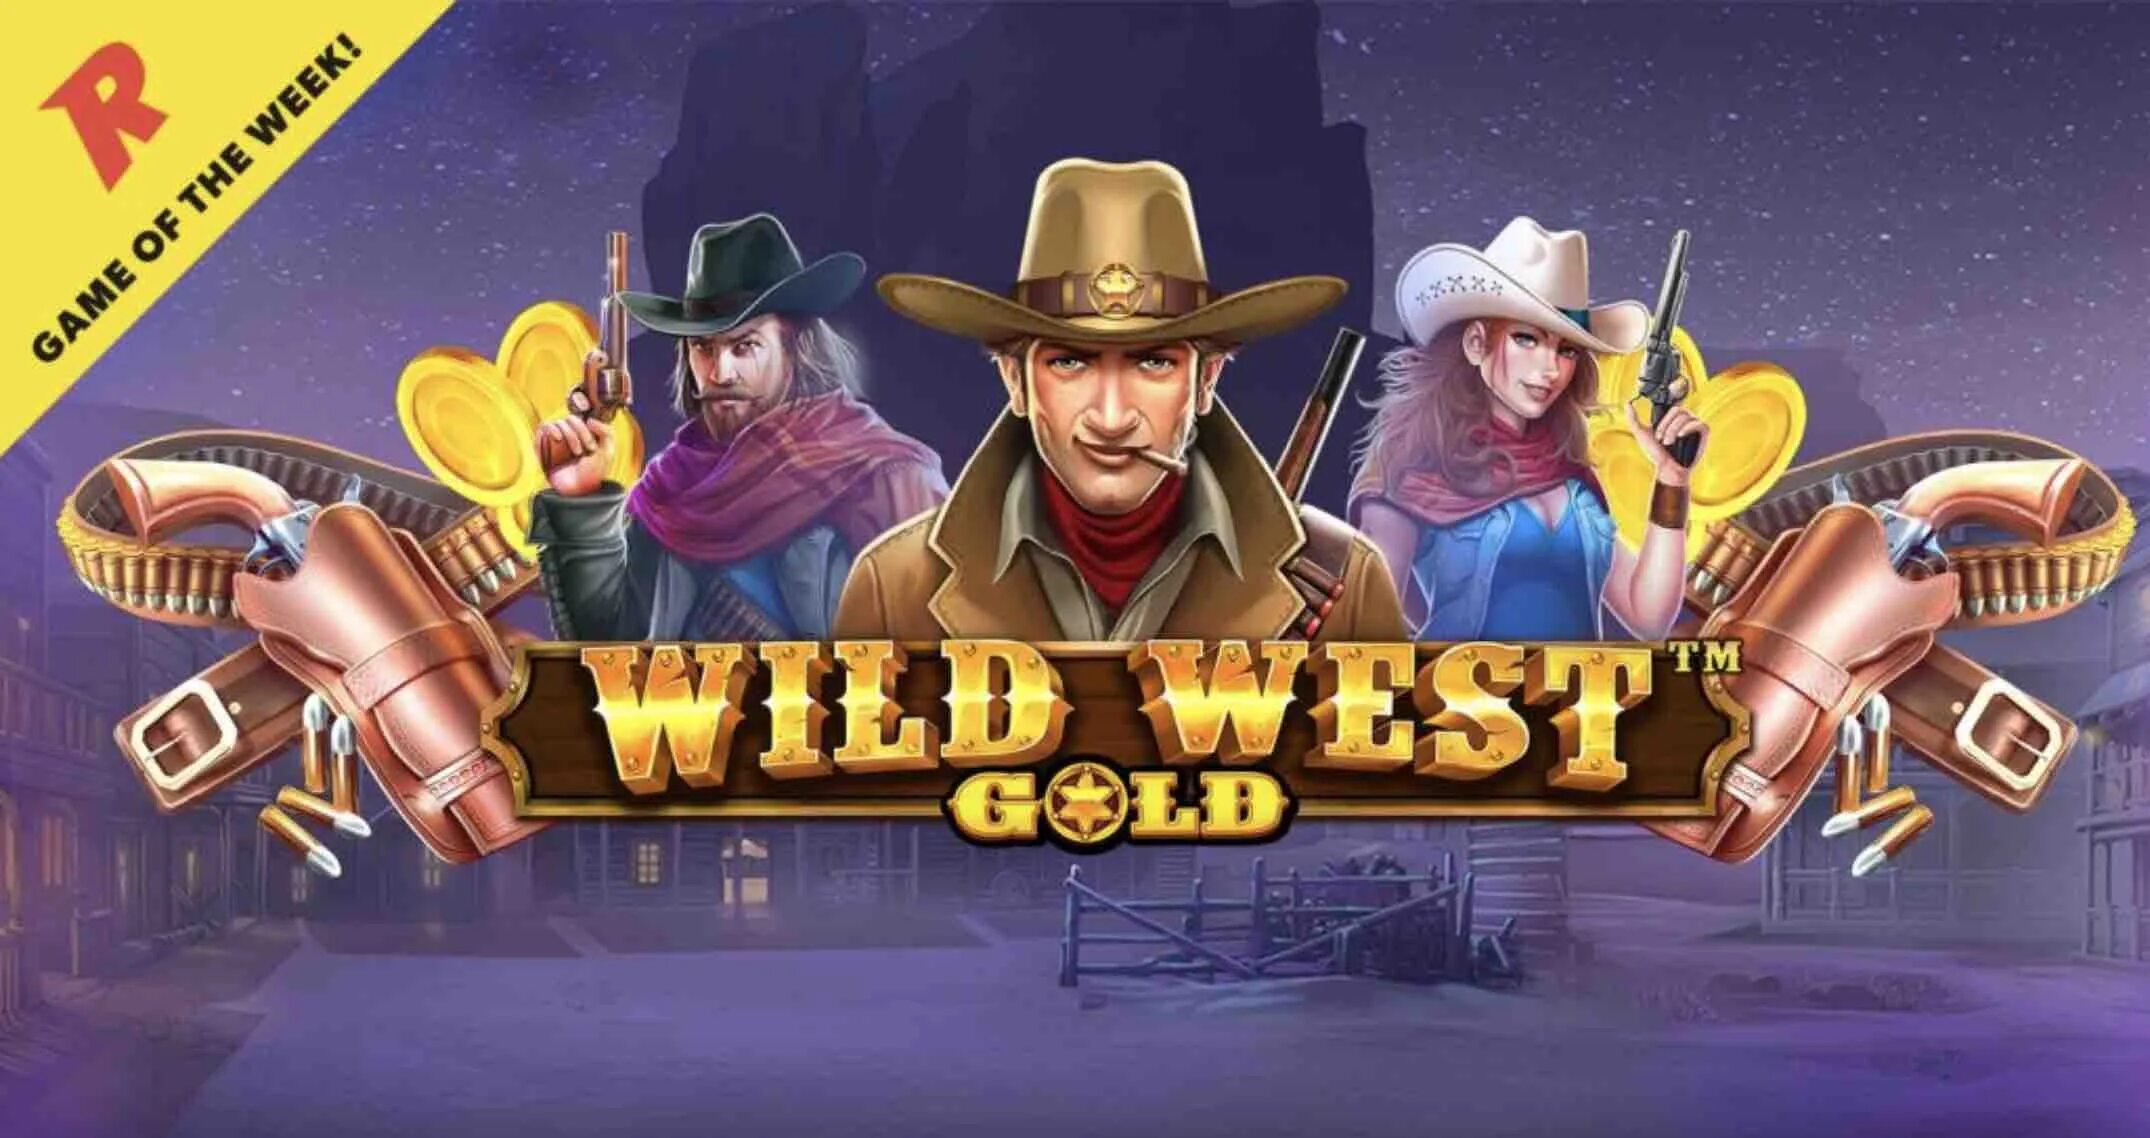 Голд вилд. Слот вилд Вест. Wild West Gold слот. Игровой автомат Wild Wild West. Wild West казино.